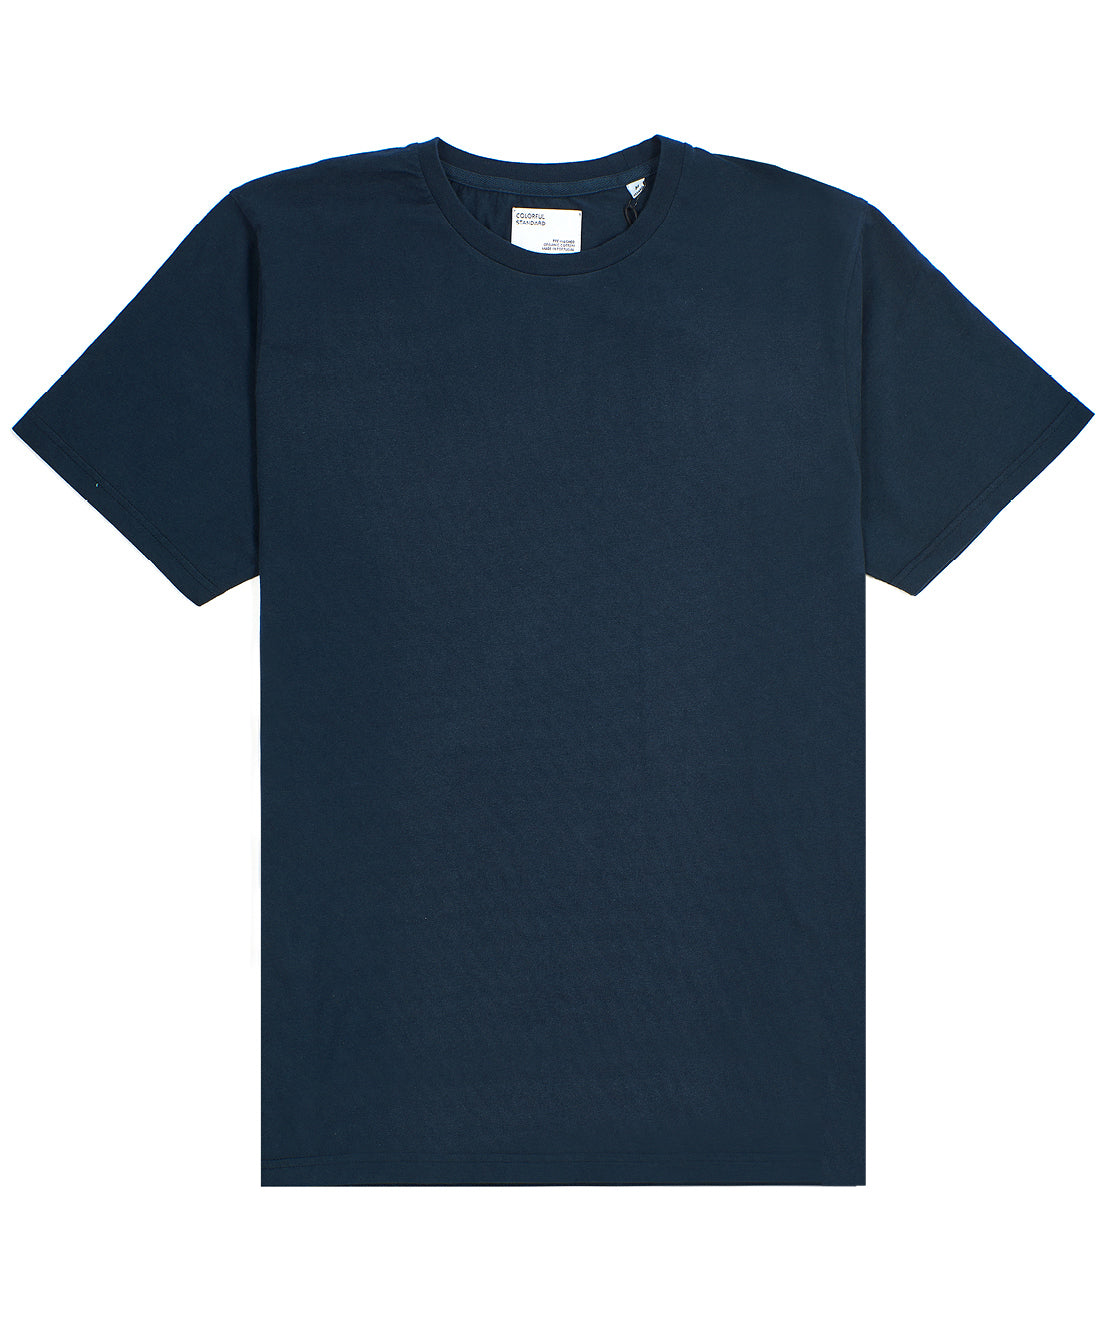 Navy Blue Classic Organic Short Sleeves Tee